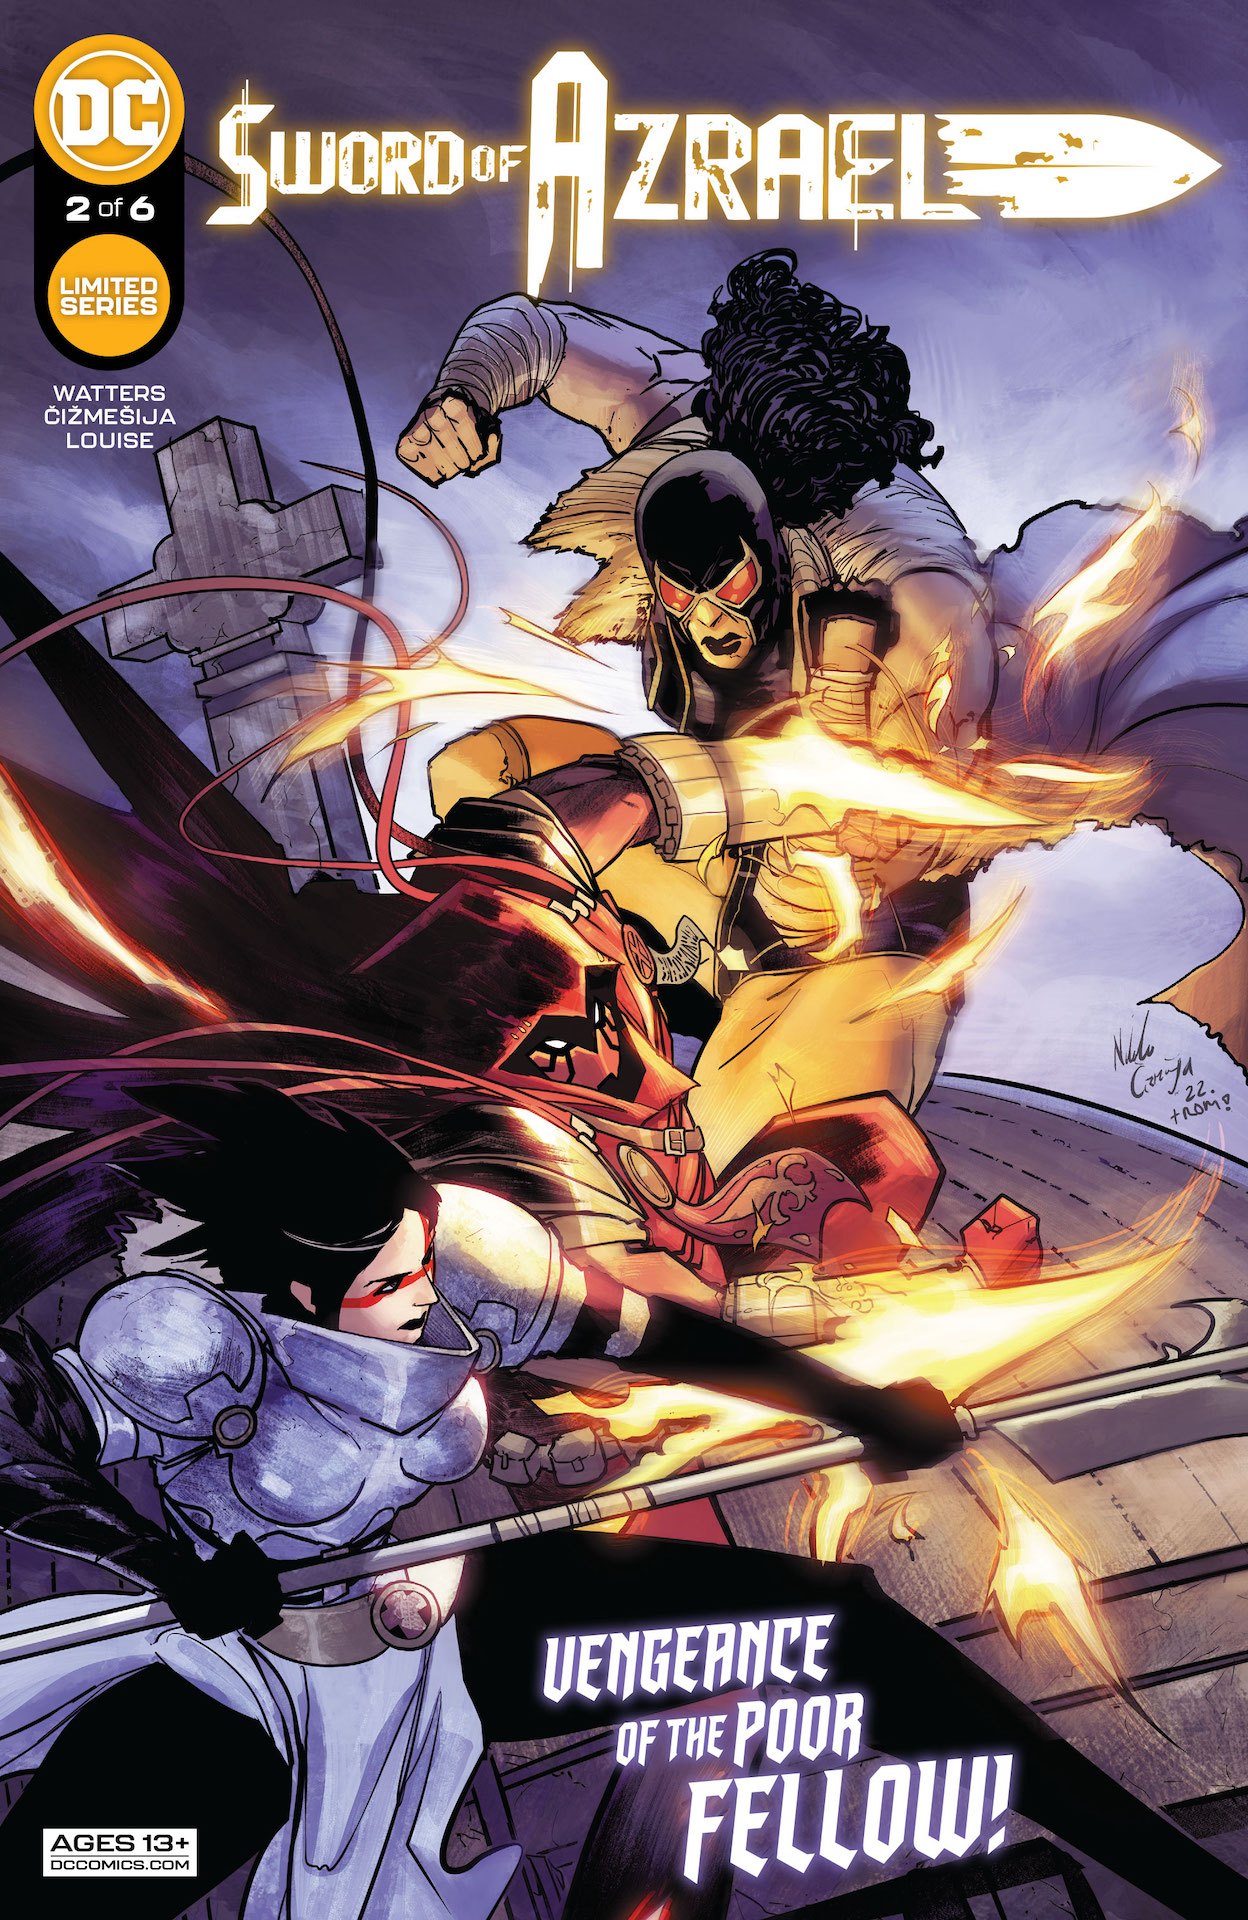 DC Preview: Sword of Azrael #2